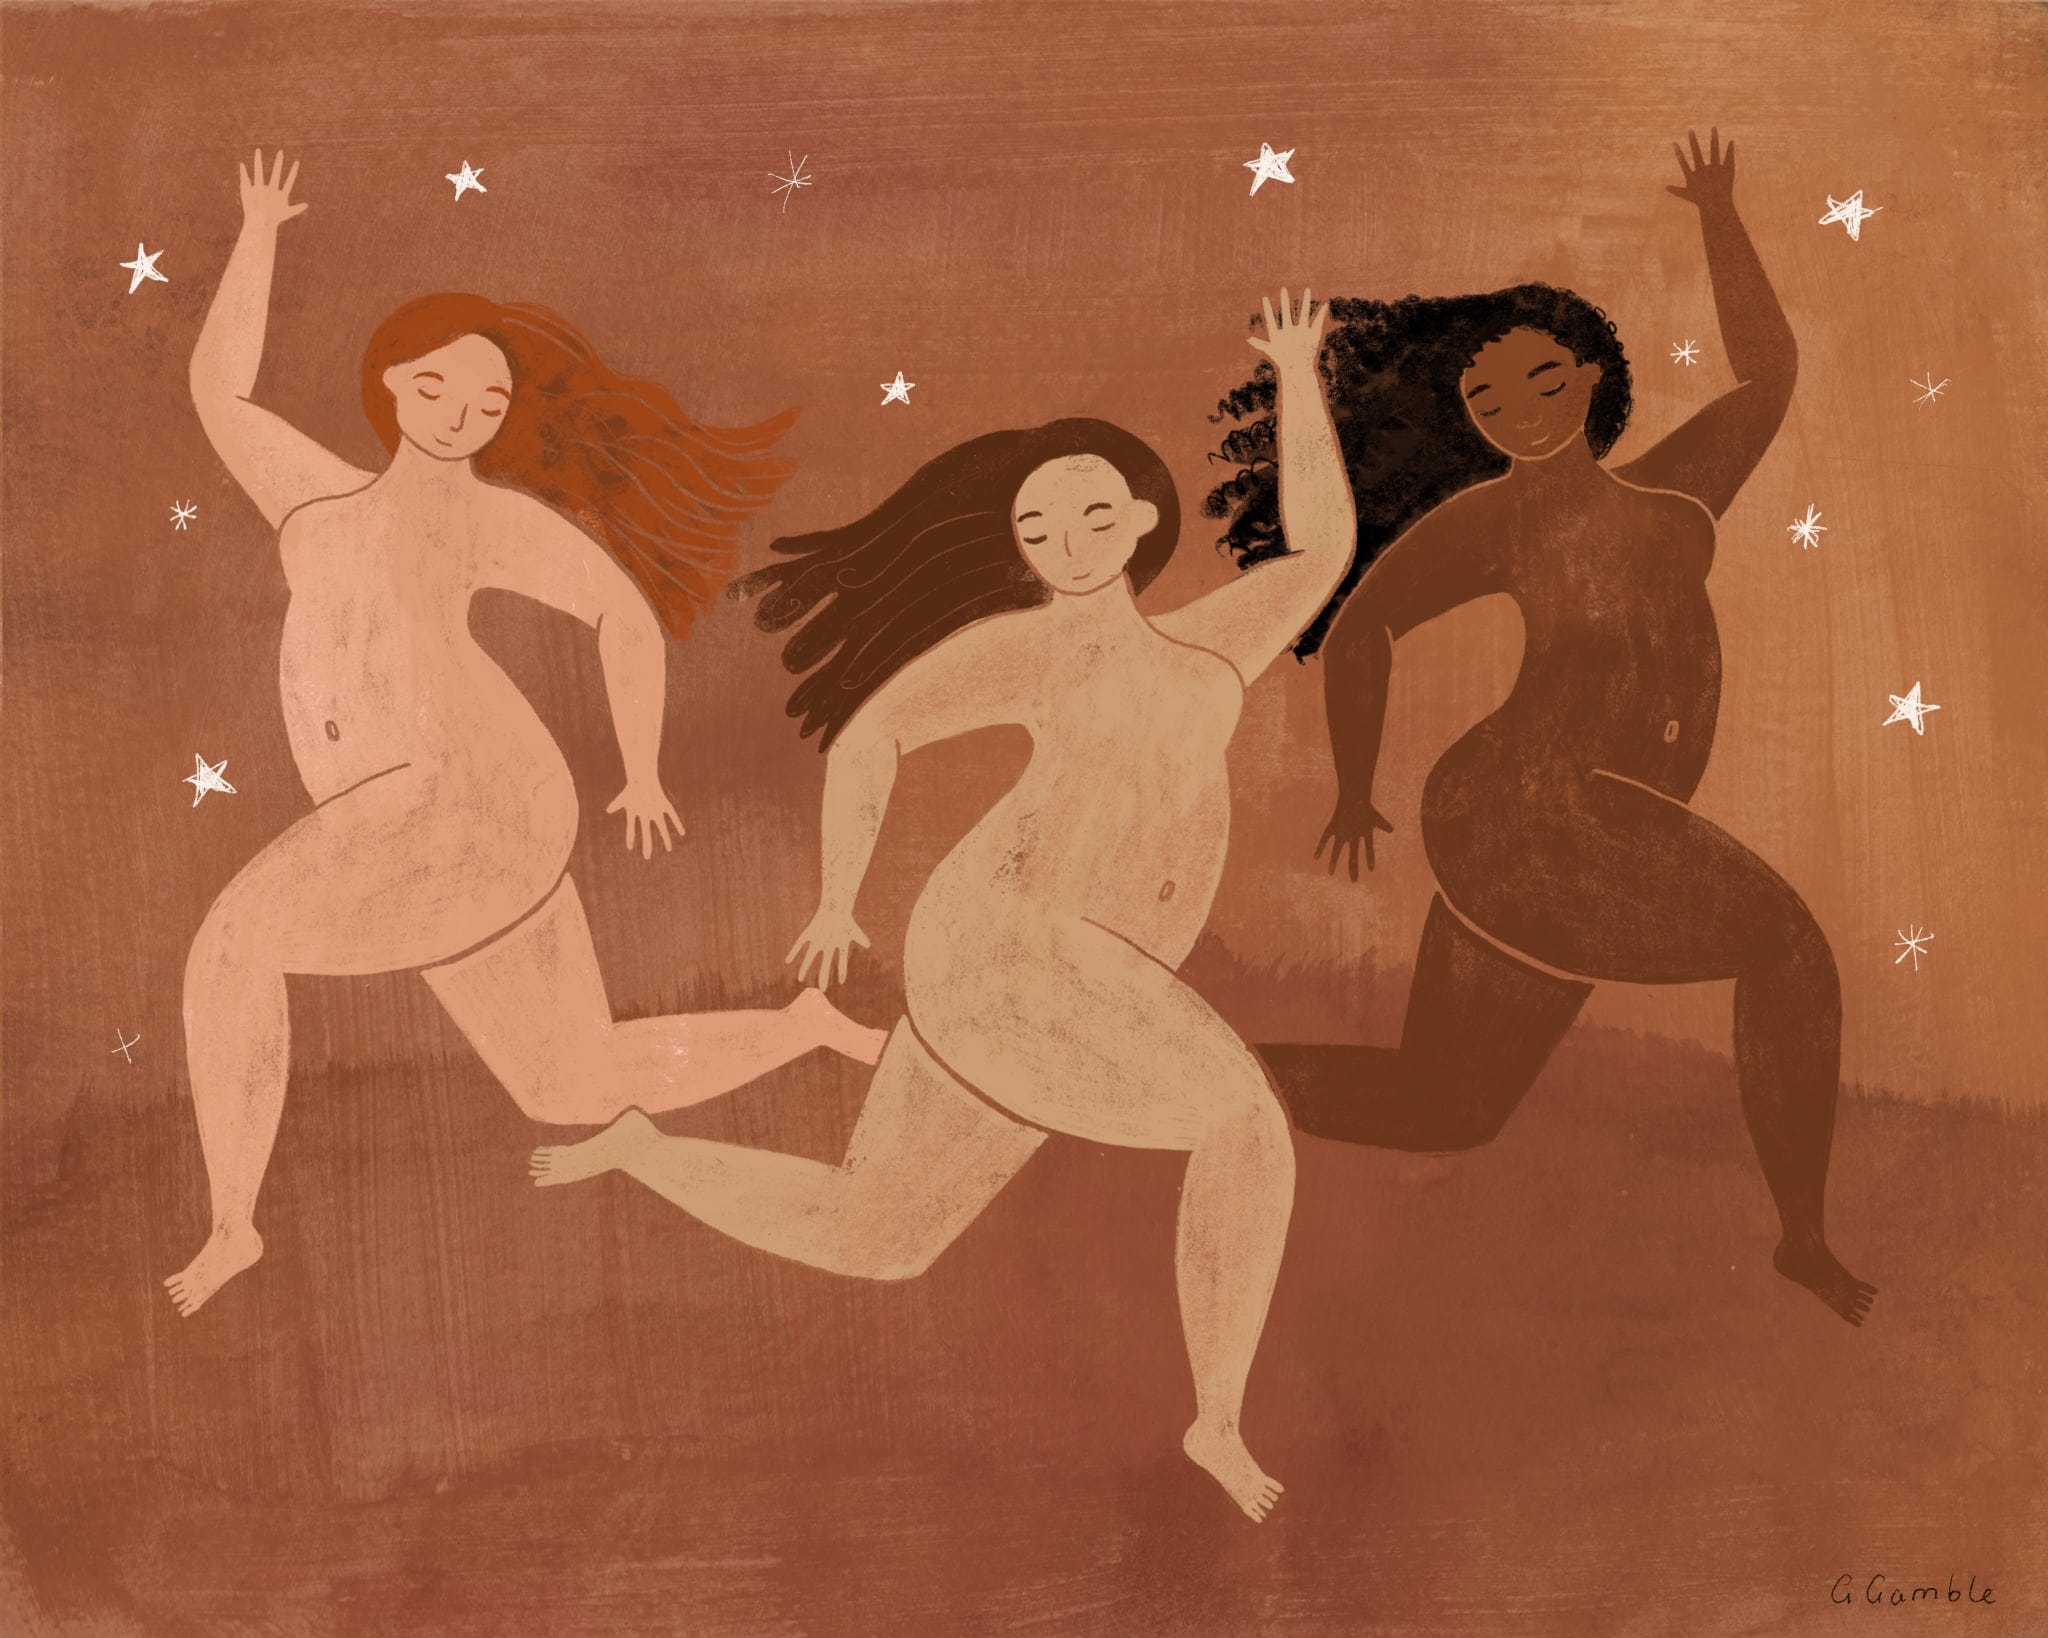 Gillian Gamble art print of three women in style of Matisse